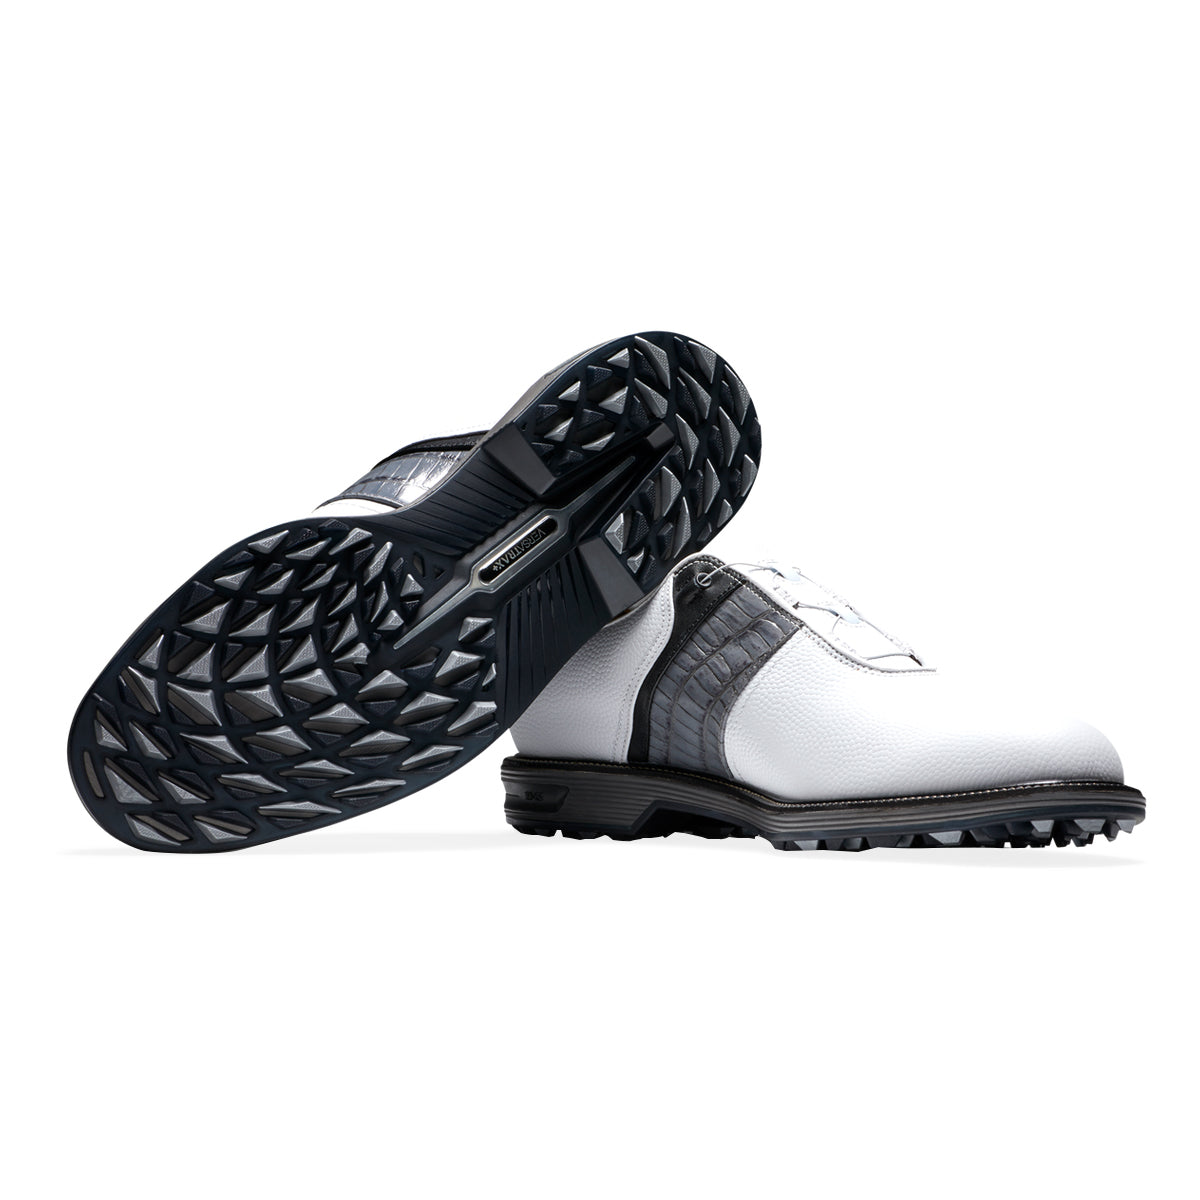 FootJoy Premiere Packard BOA Spikeless Golf Shoes 2021